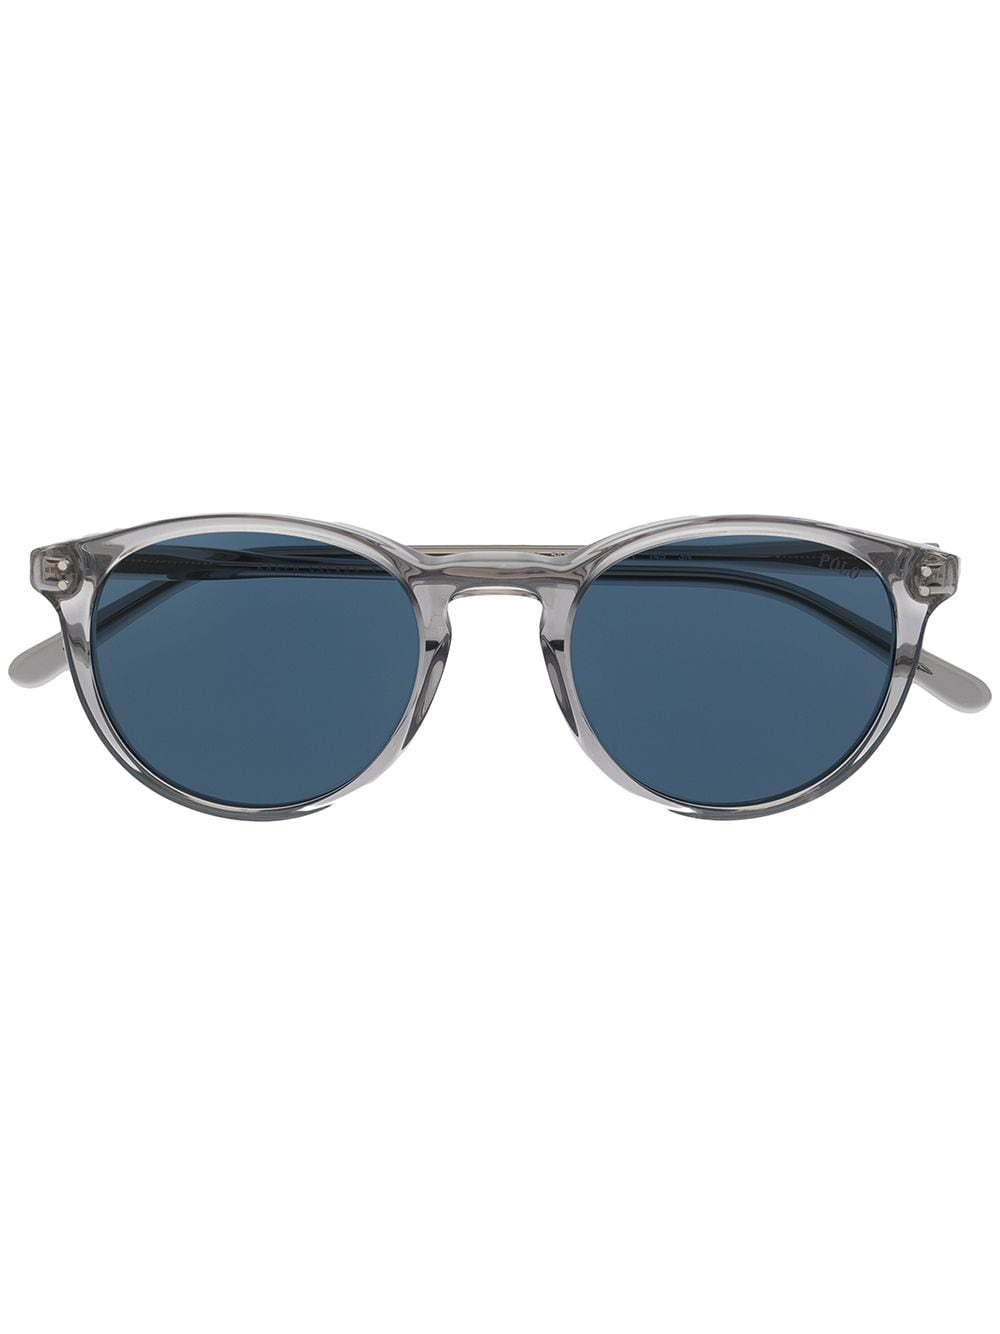 Polo Ralph Lauren Collegiate pantos sunglasses - Grey